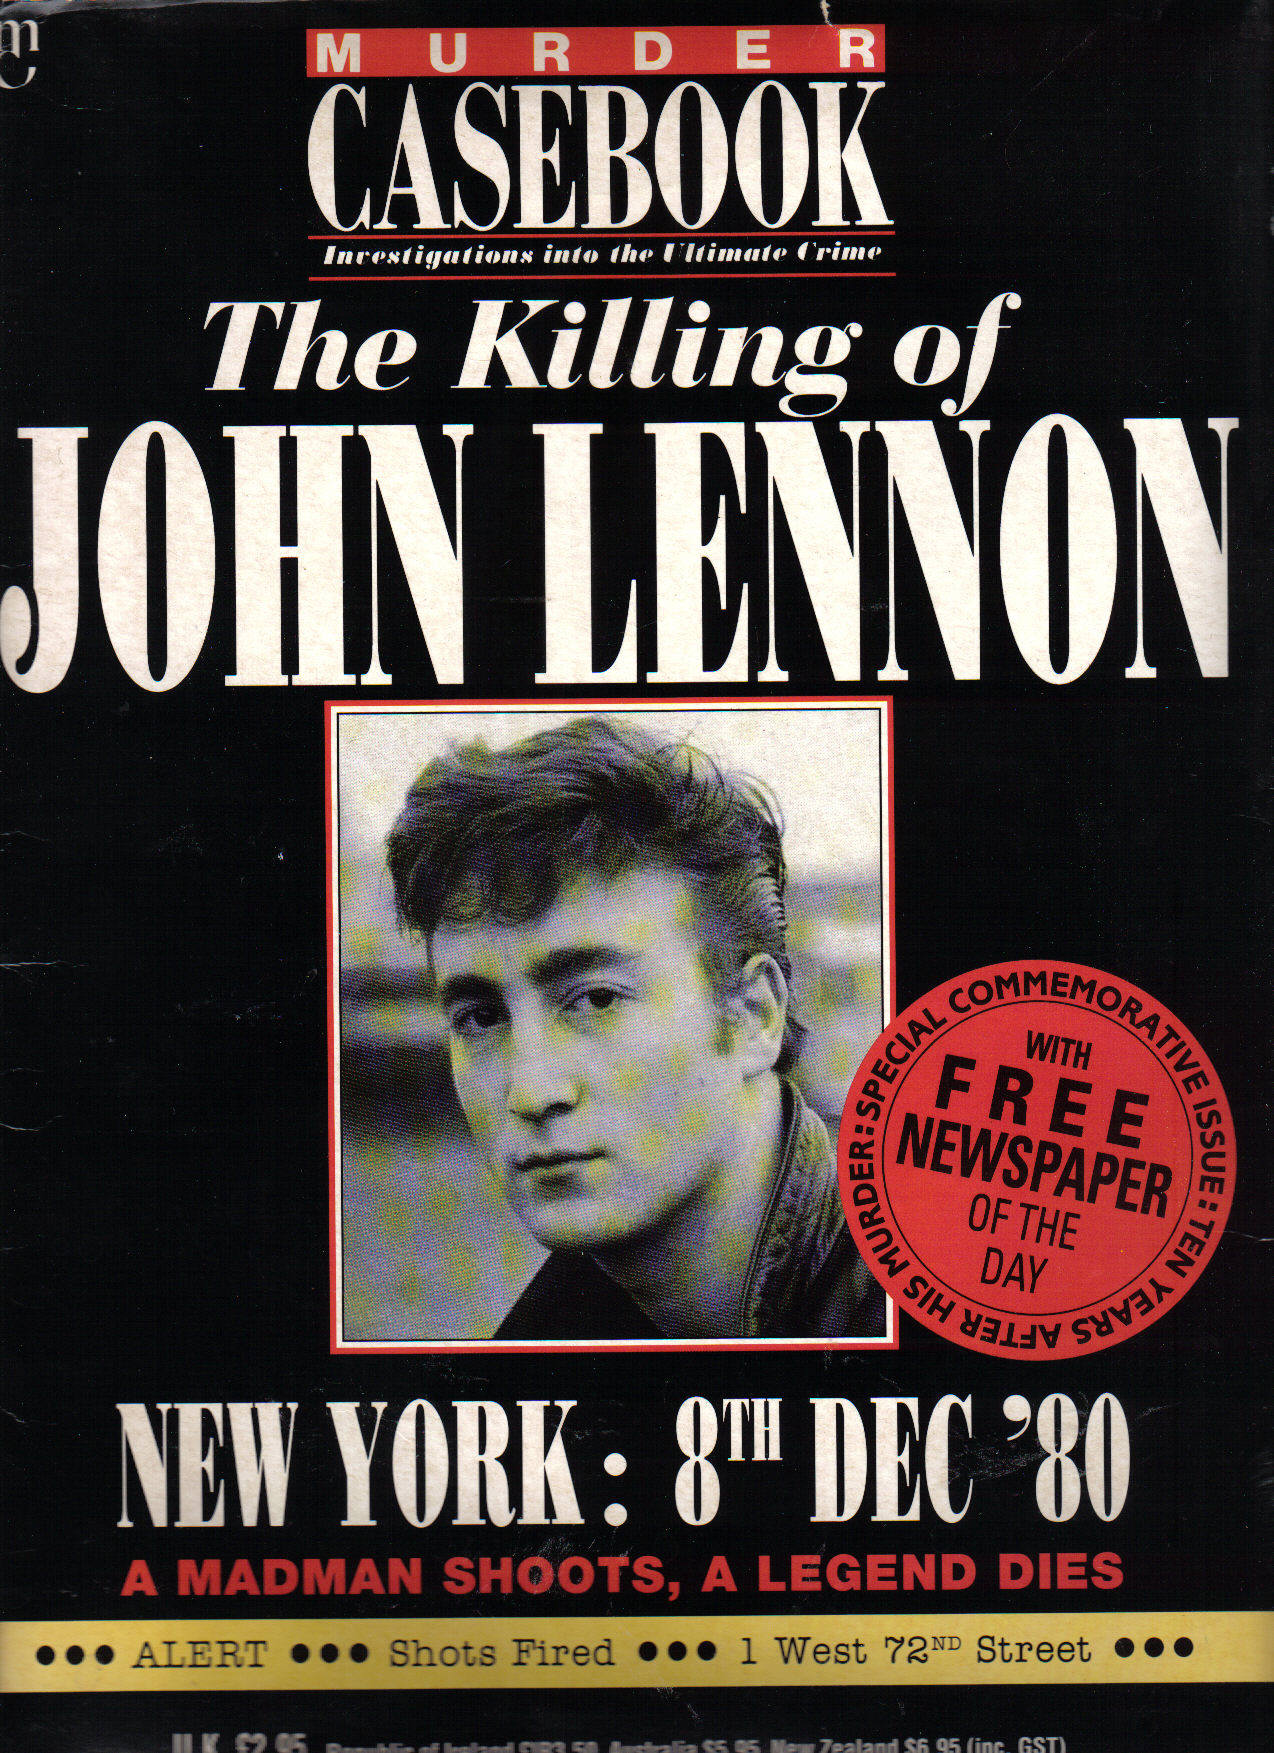 John+lennon+death+conspiracy